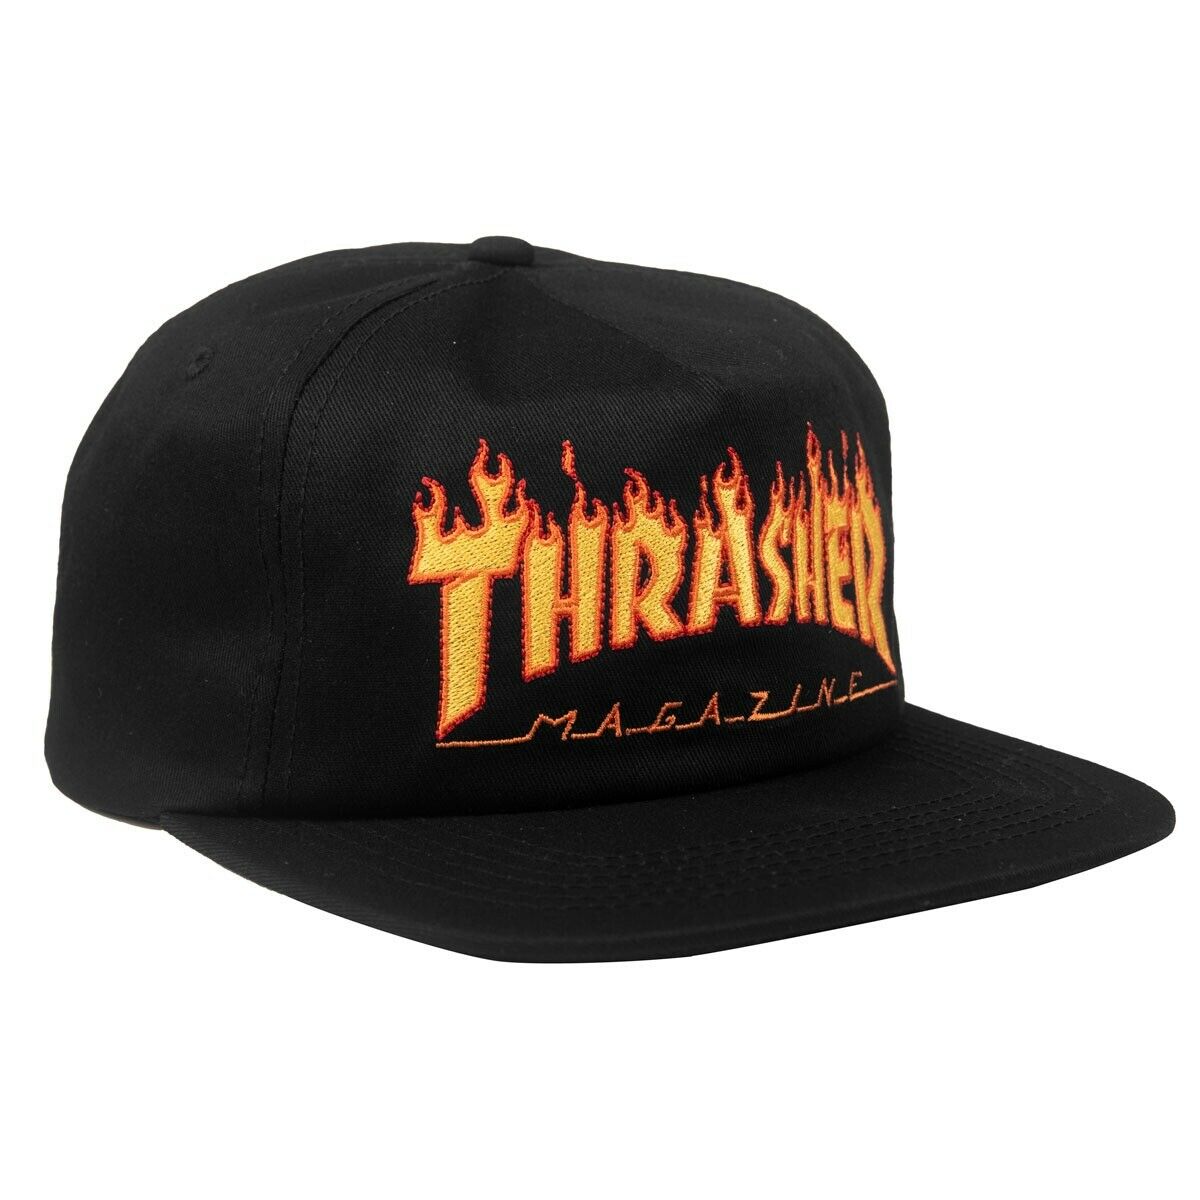 Thrasher Embroidered Flame Logo Snapback Hat Black